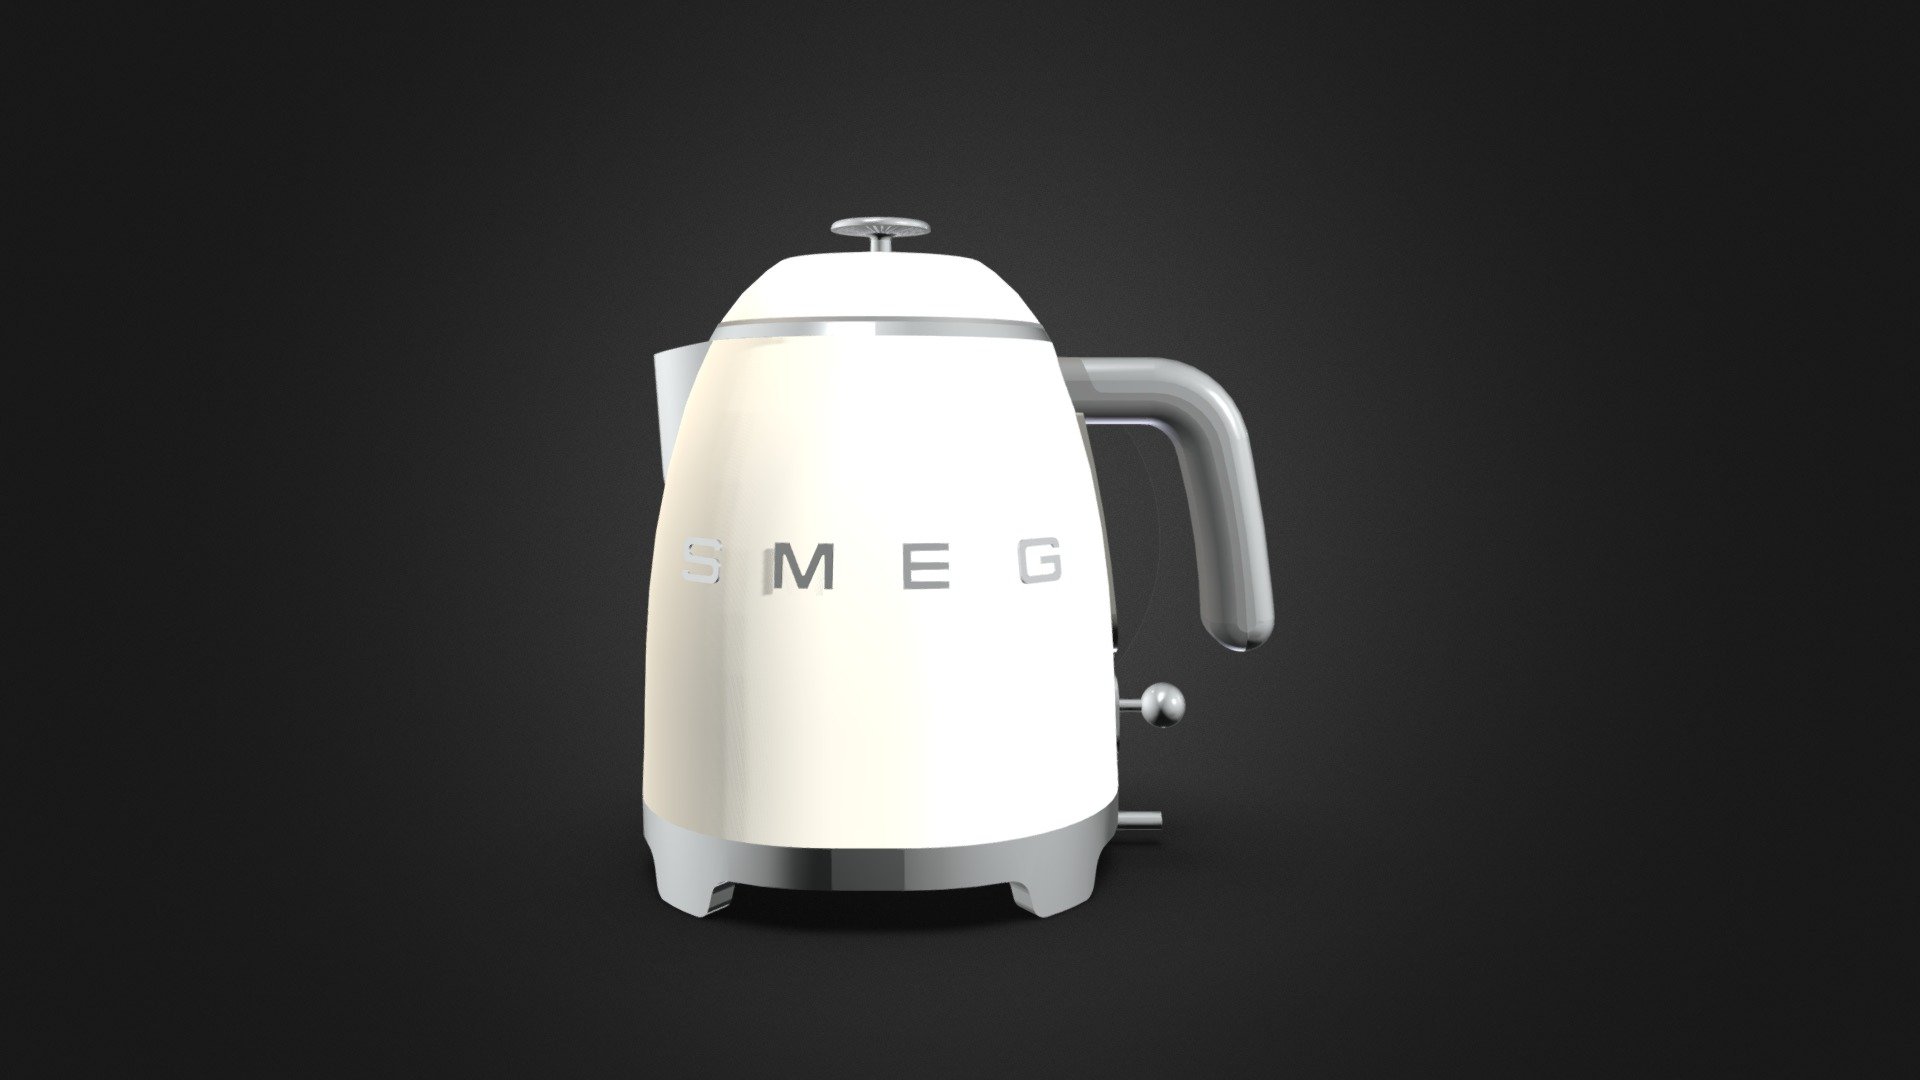 SMEG Electric Kettle 3D Logo